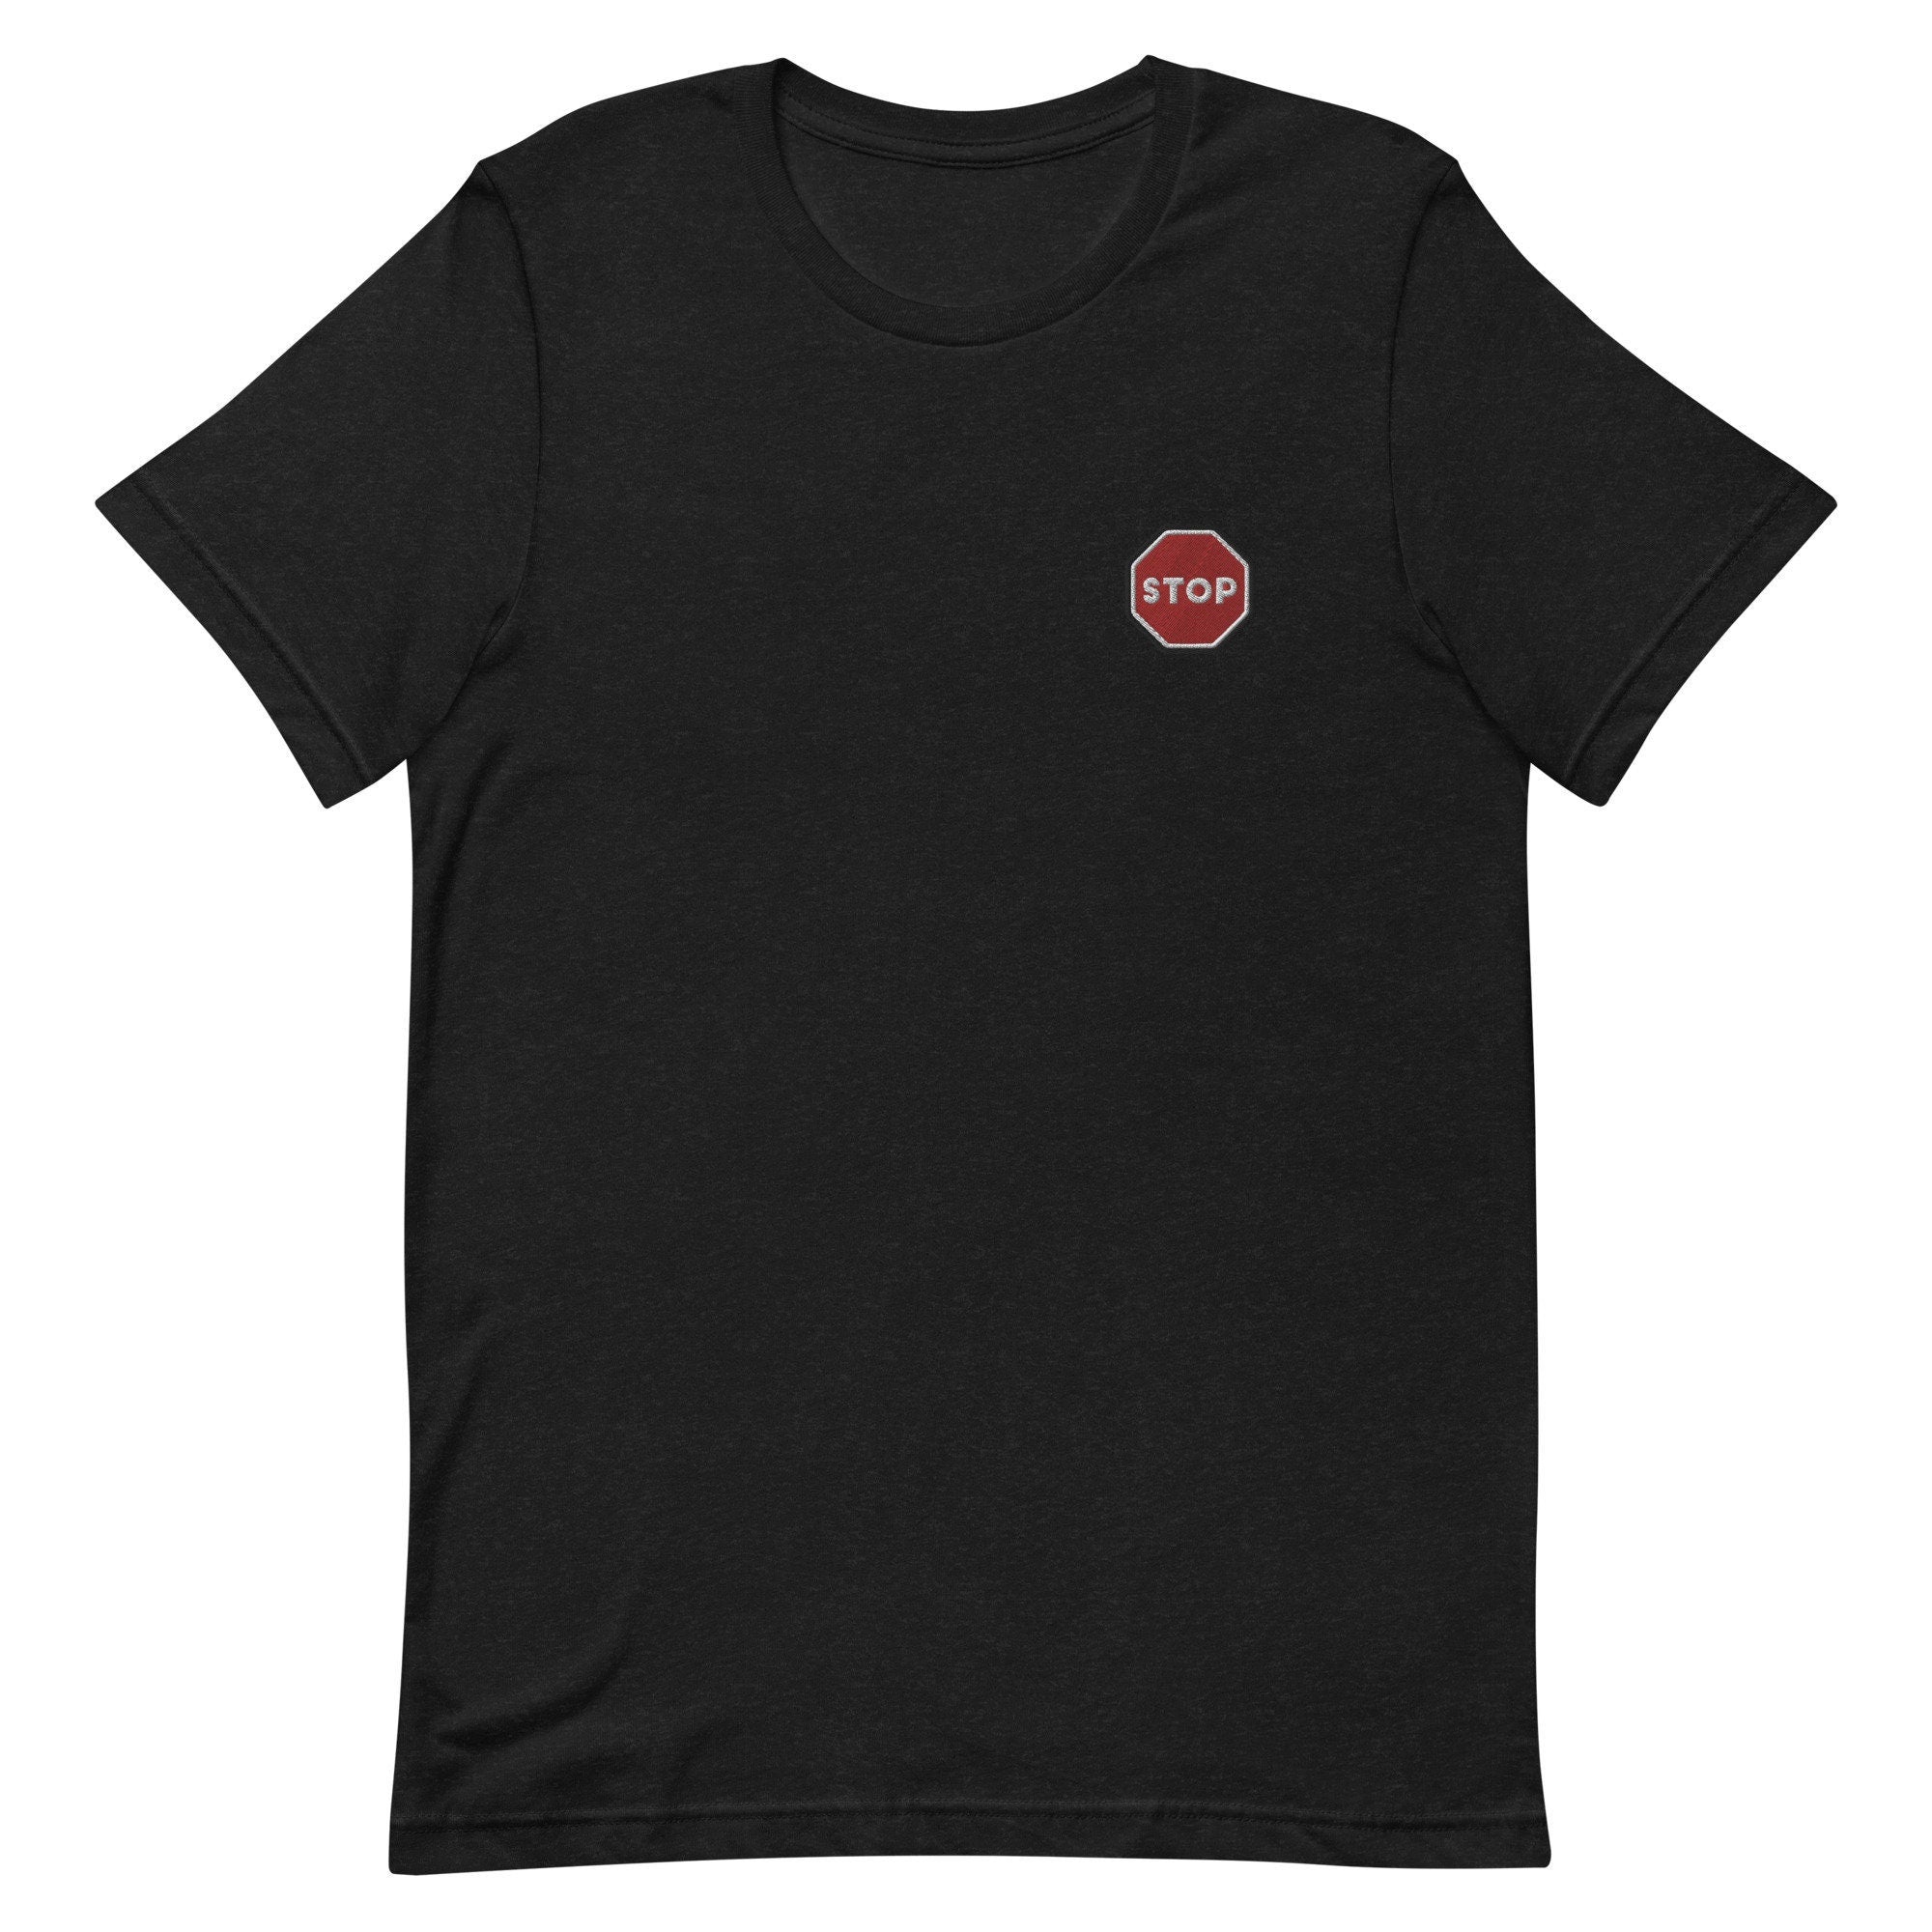 Stop SIgn Premium Men's T-Shirt, Embroidered Men's T-Shirt Gift for Boyfriend, Men's Short Sleeve Shirt - Multiple Colors